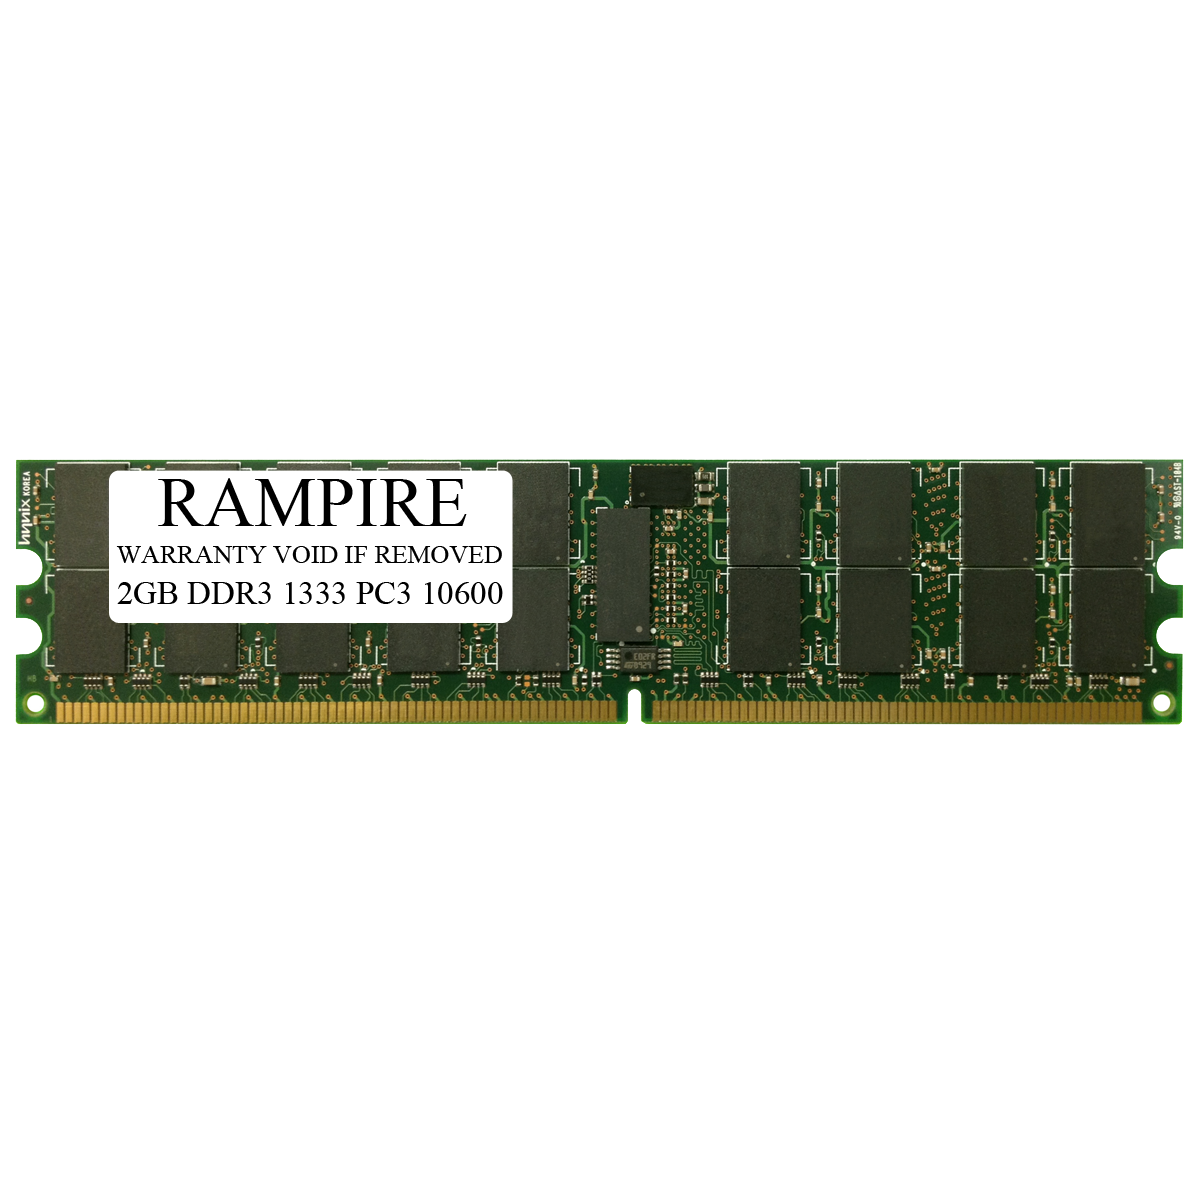 RAMPIRE 2GB DDR3 1333 (PC3 10600) 240-Pin SDRAM 2Rx8 Standard Profile 1.5V ECC Registered Server Memory